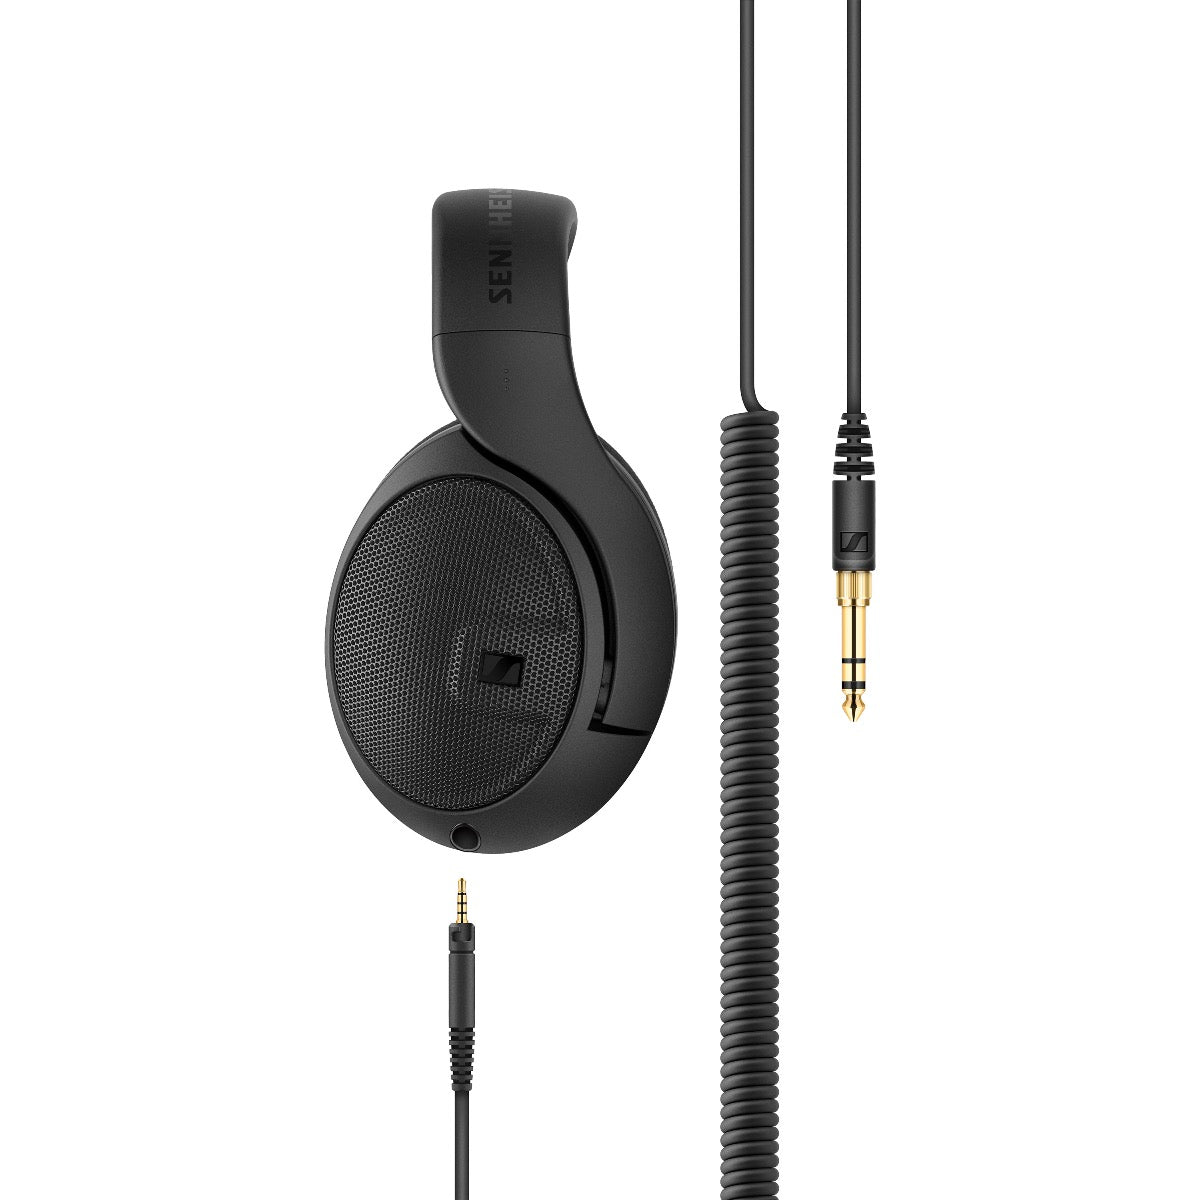 Sennheiser HD 400 Pro Studio Reference Headphones - Black View 1